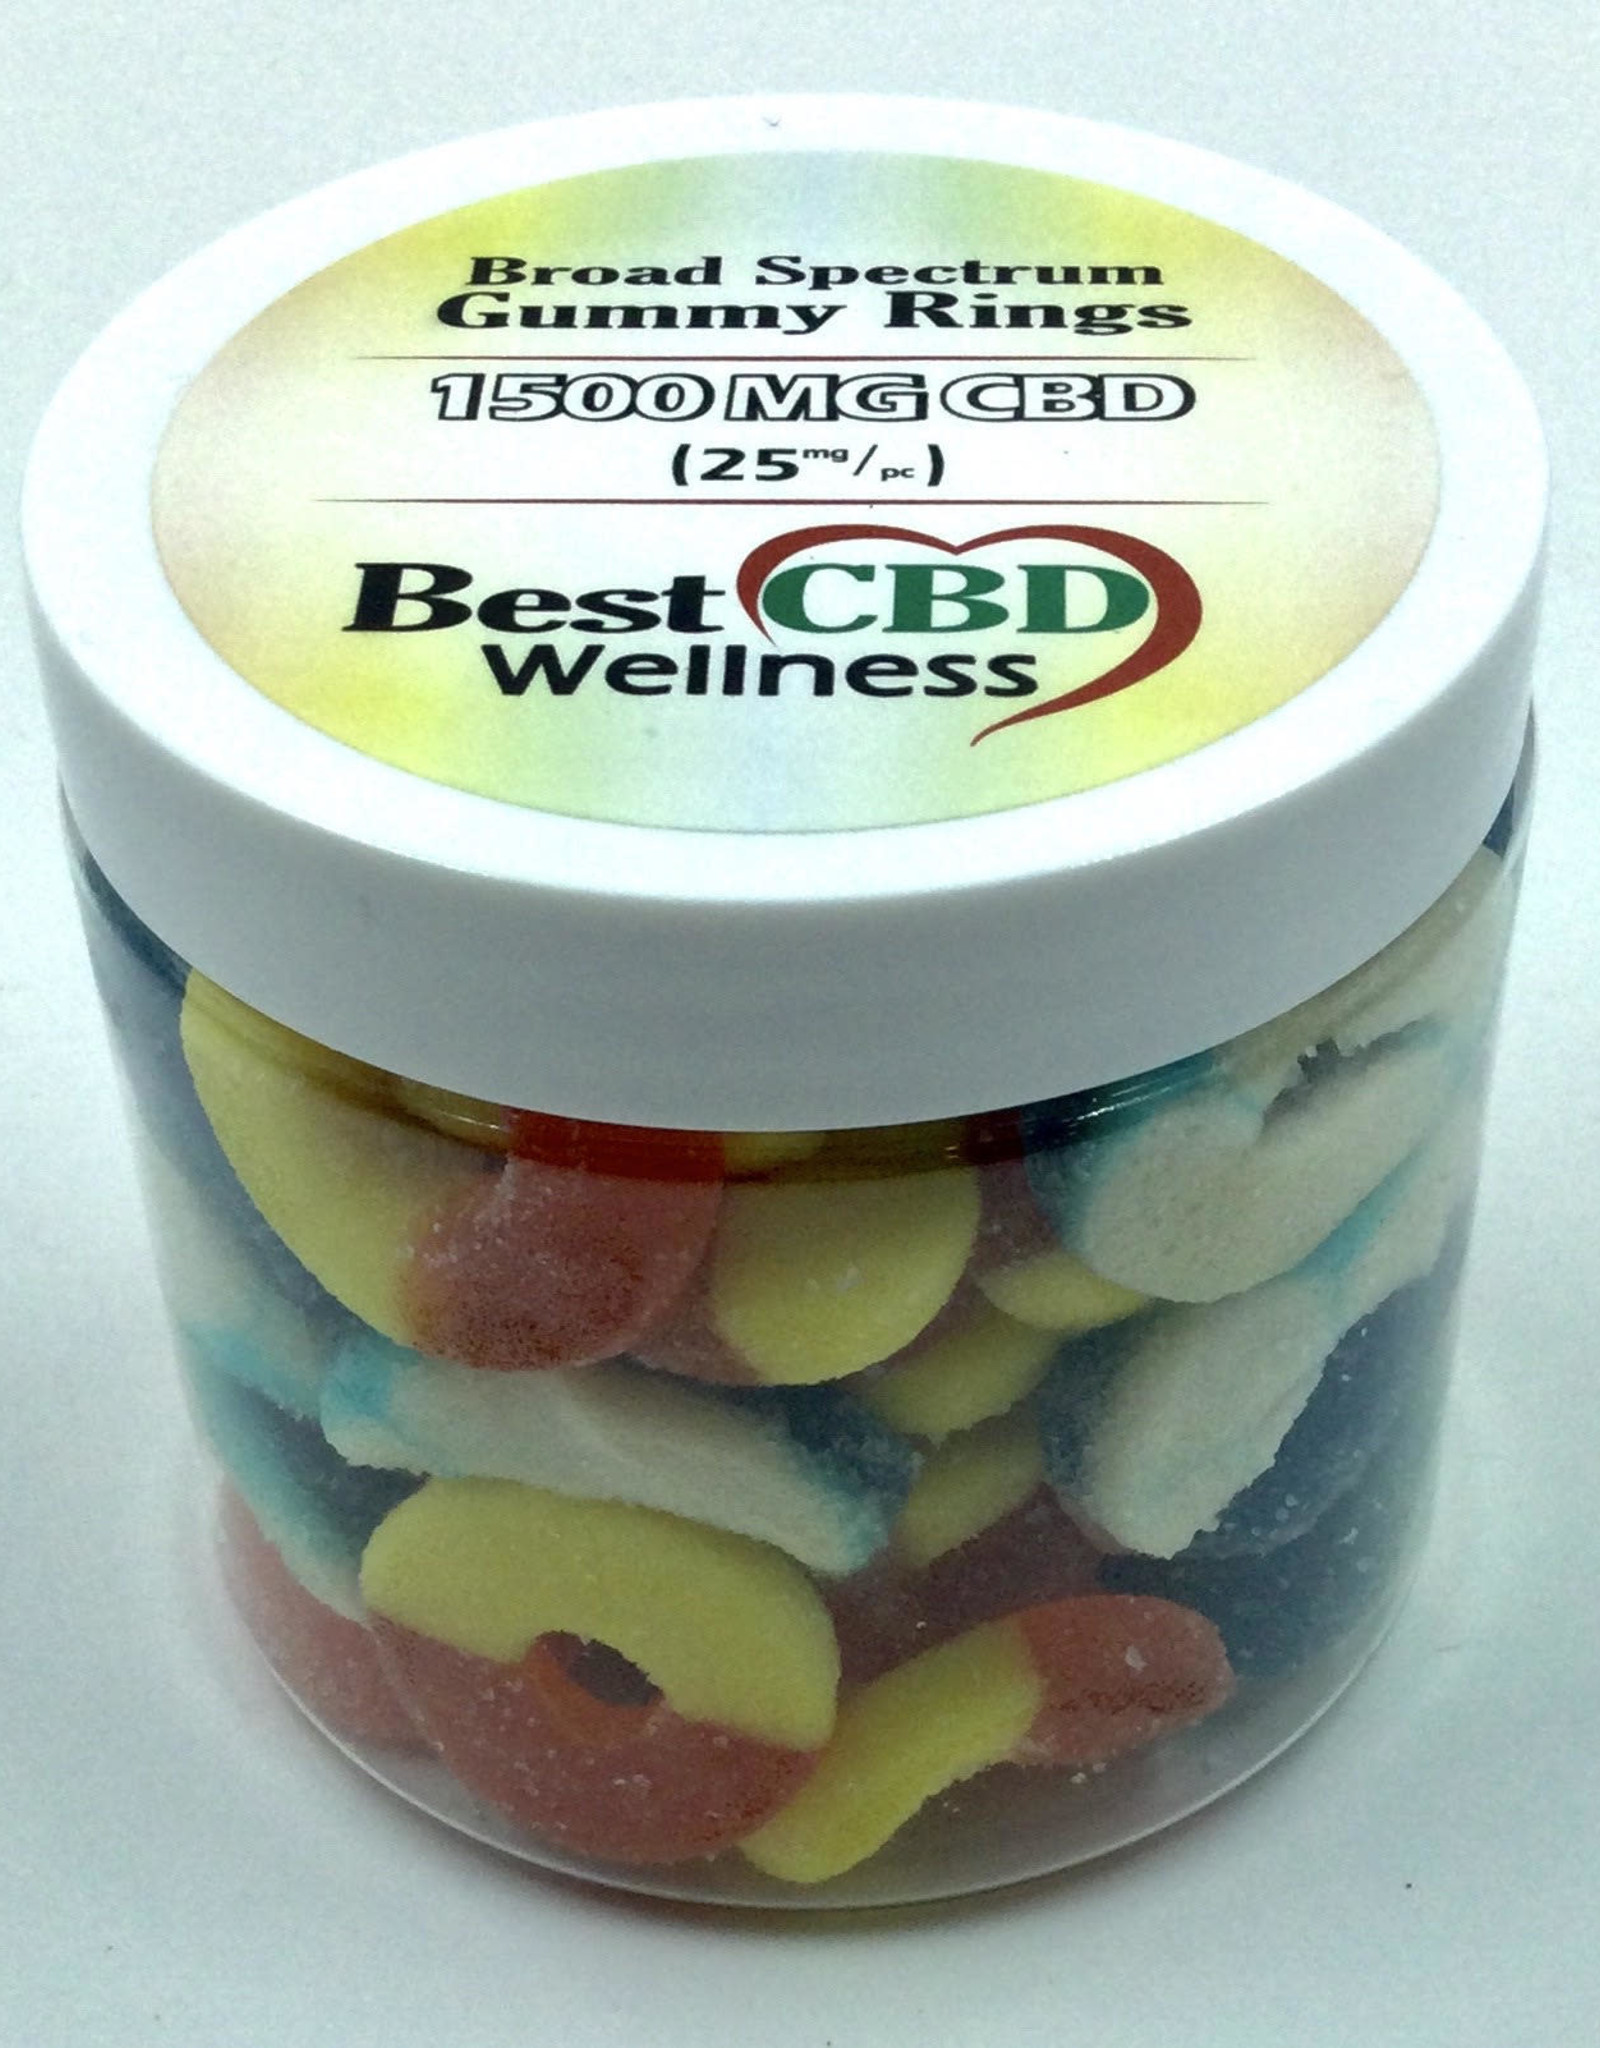 Best CBD Wellness CBD Broad Spectrum Gummy Rings 1500mg 60pc 25mg each